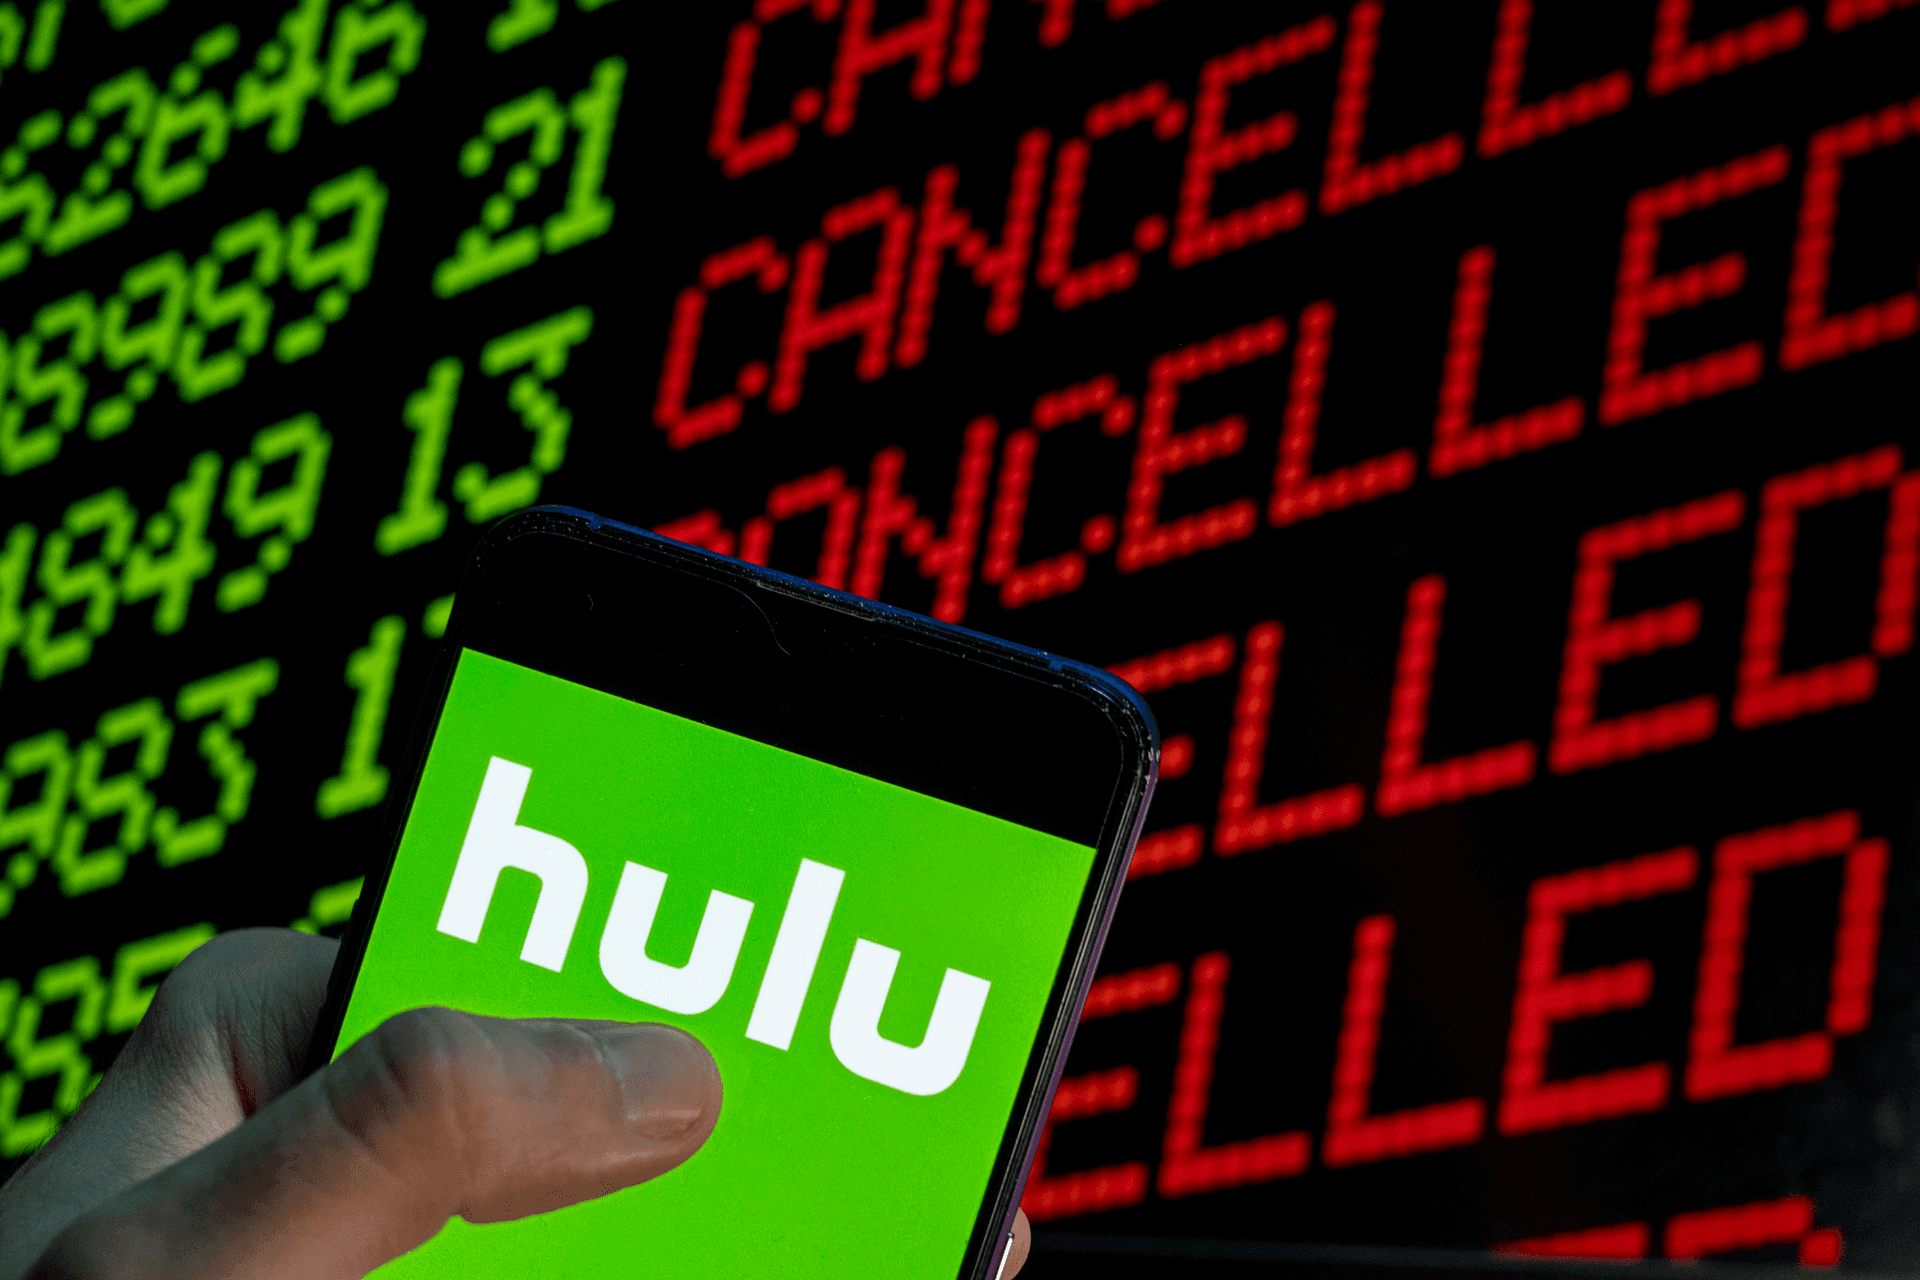 Hulu Cancelled